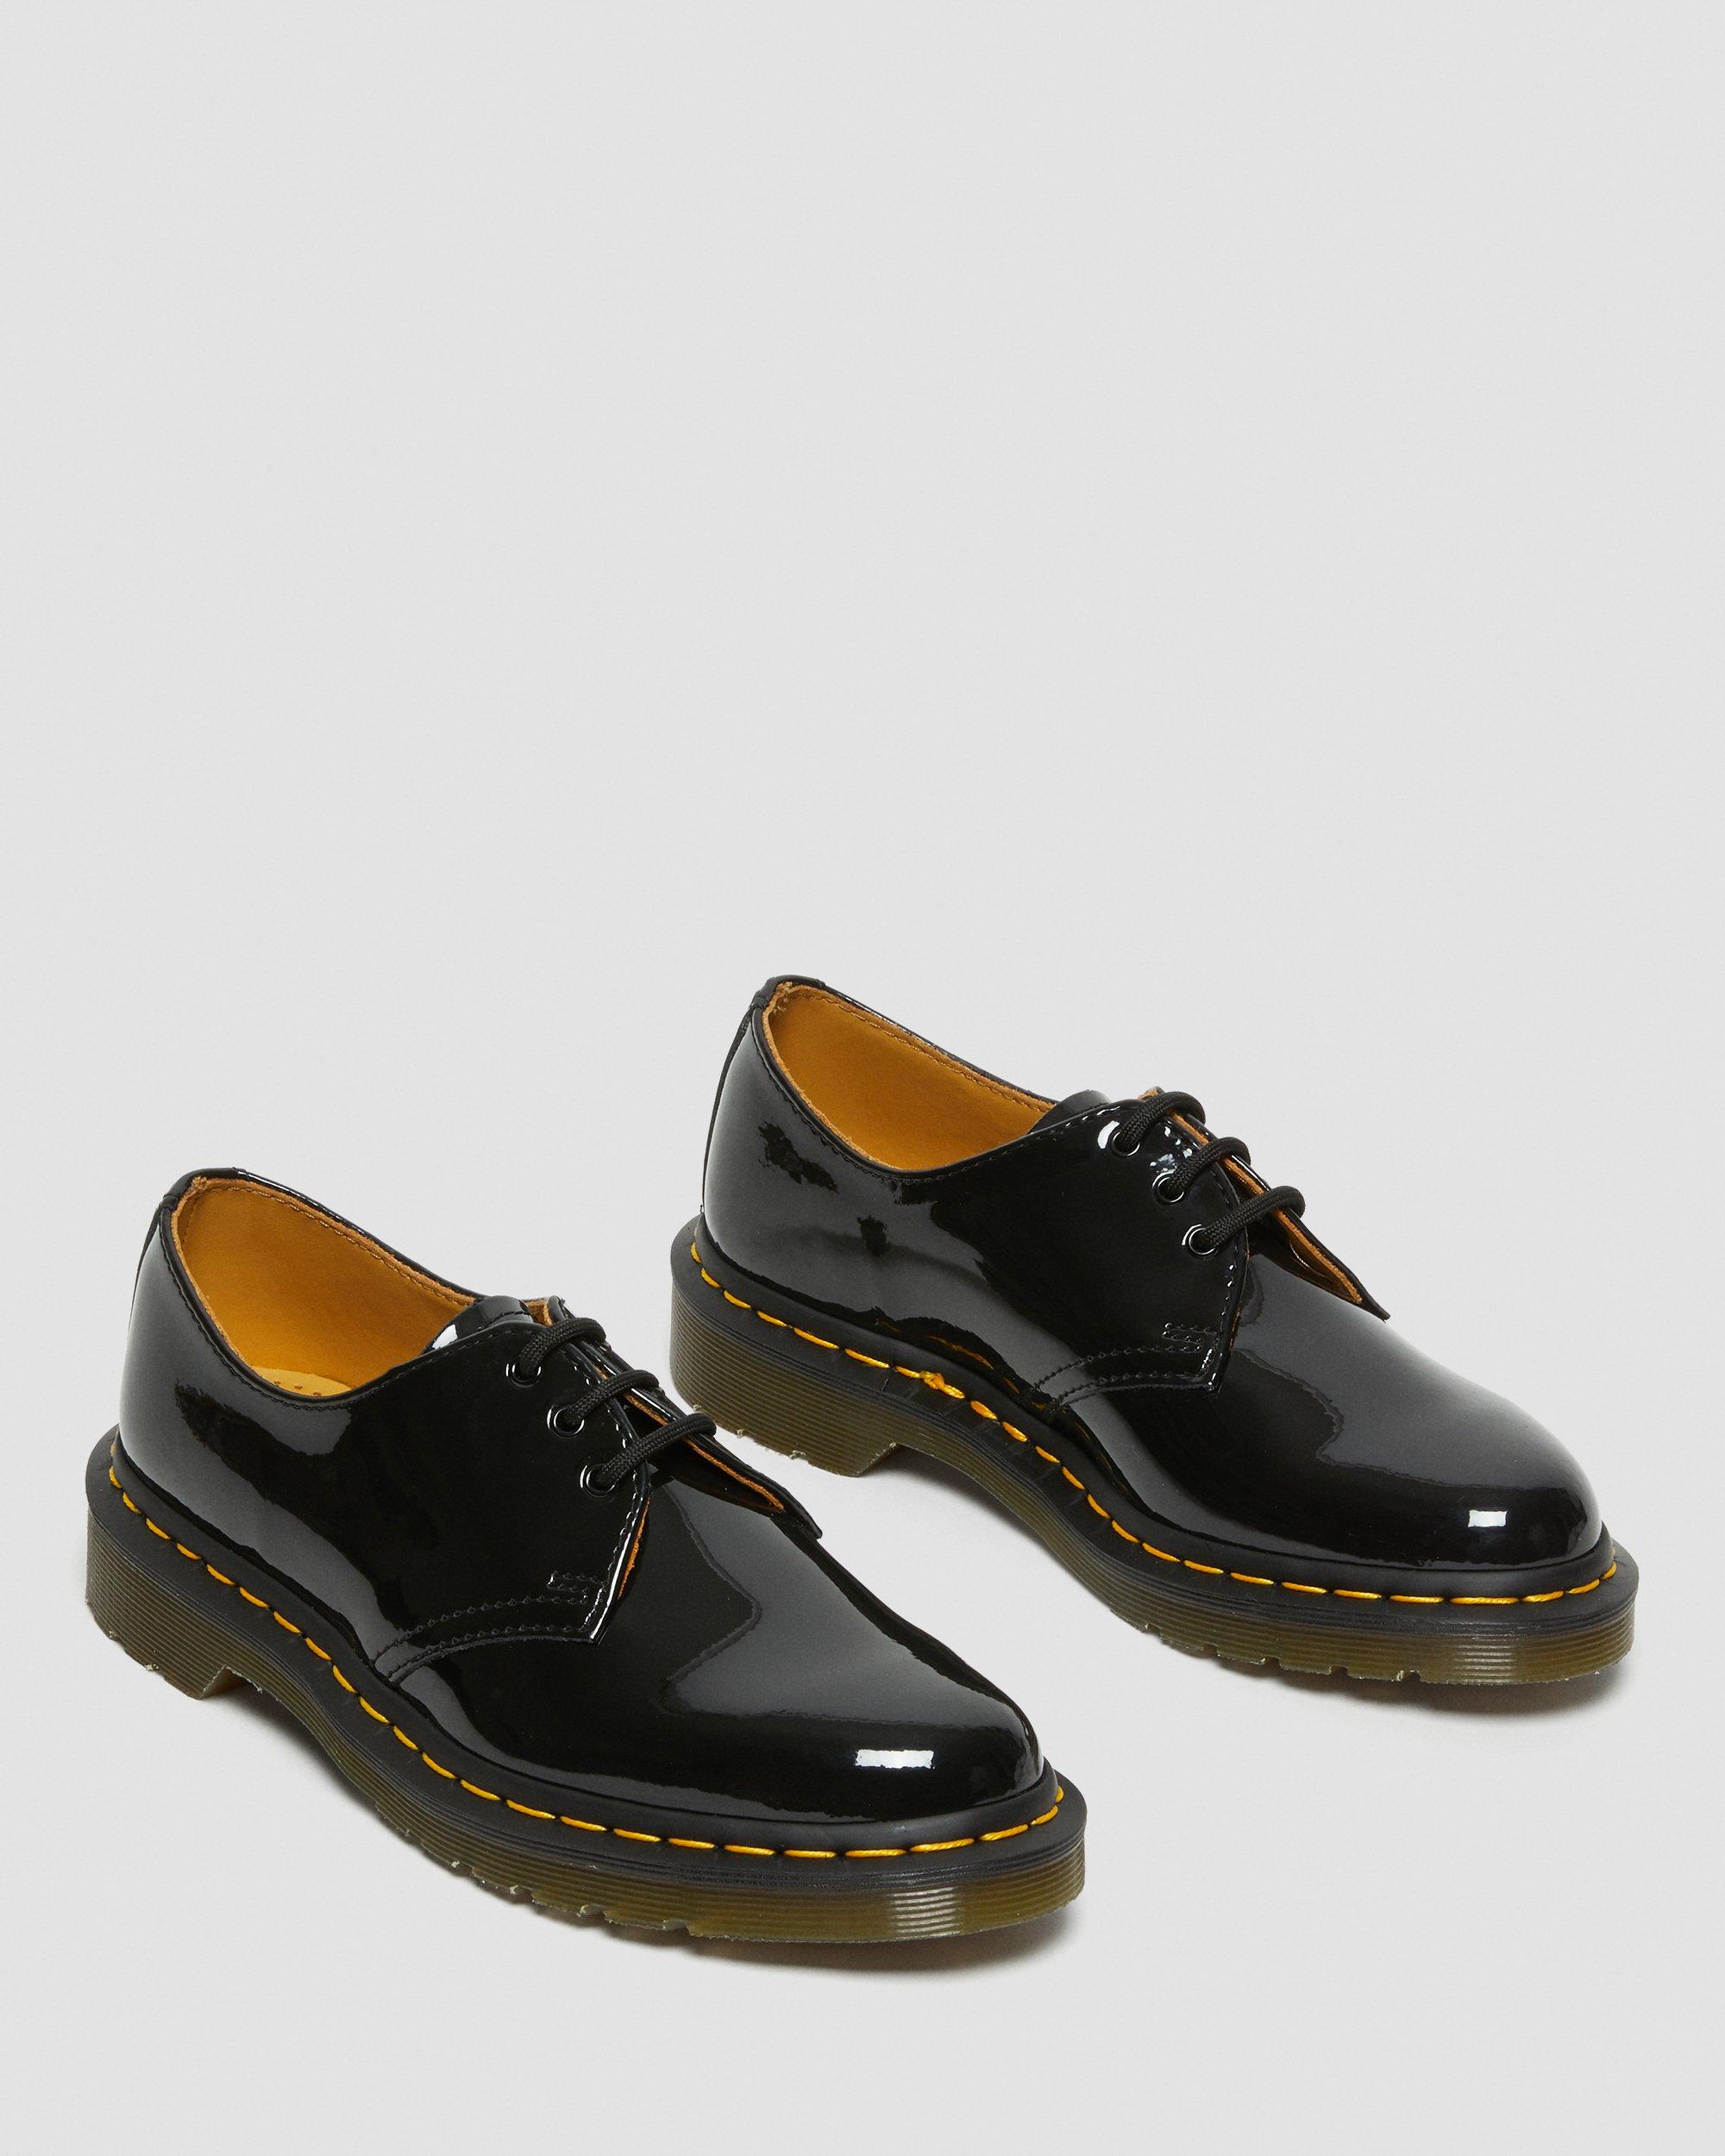 Martens Womens Black Leather Patent 1461 Lace-Up Shoes Dr